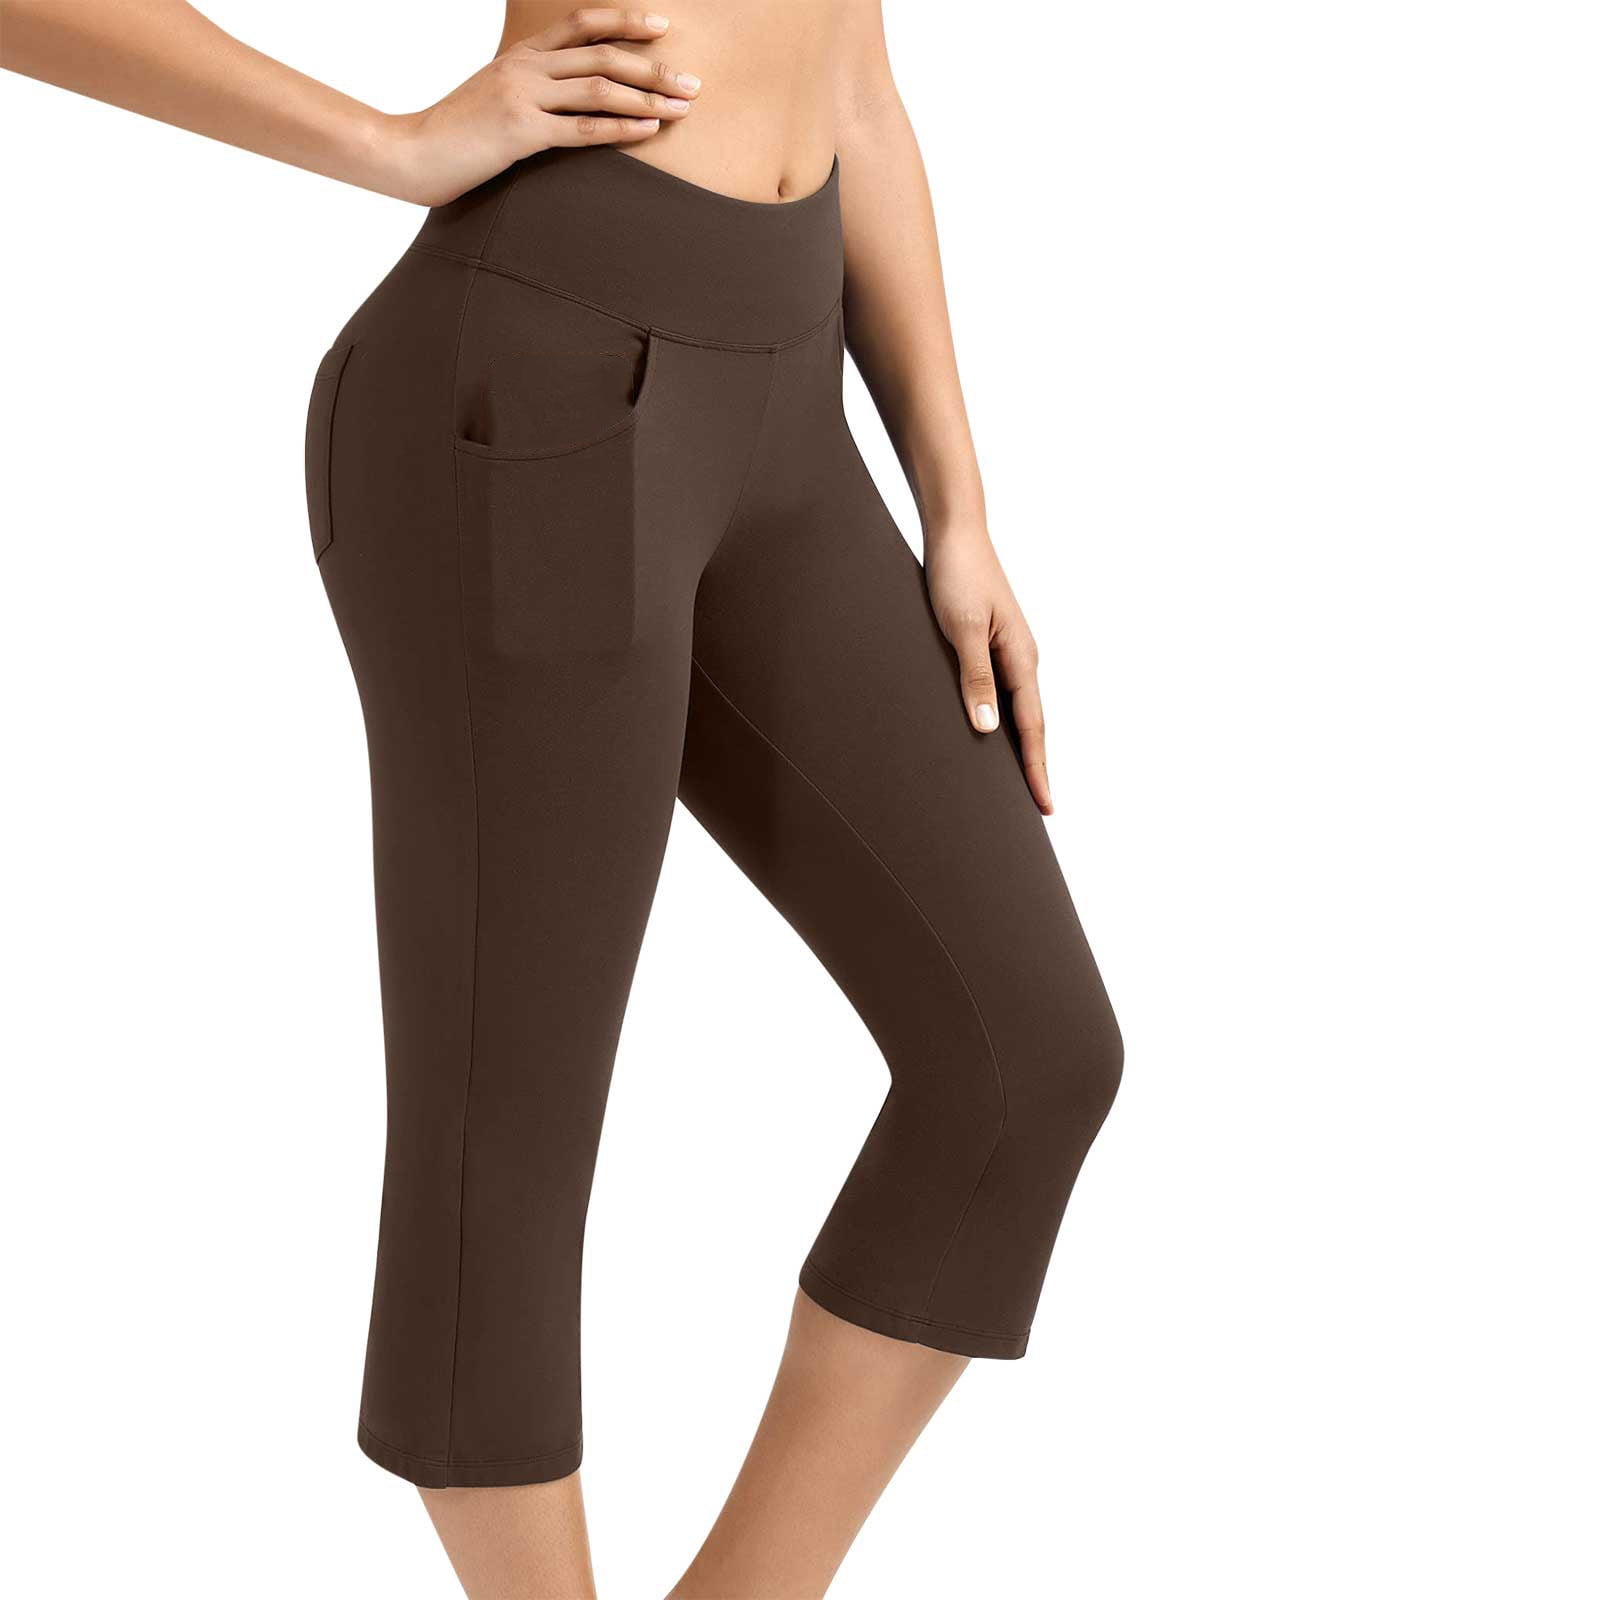 Mrat Pants with Pockets for Work Yoga Capris Pants Ladies Knee